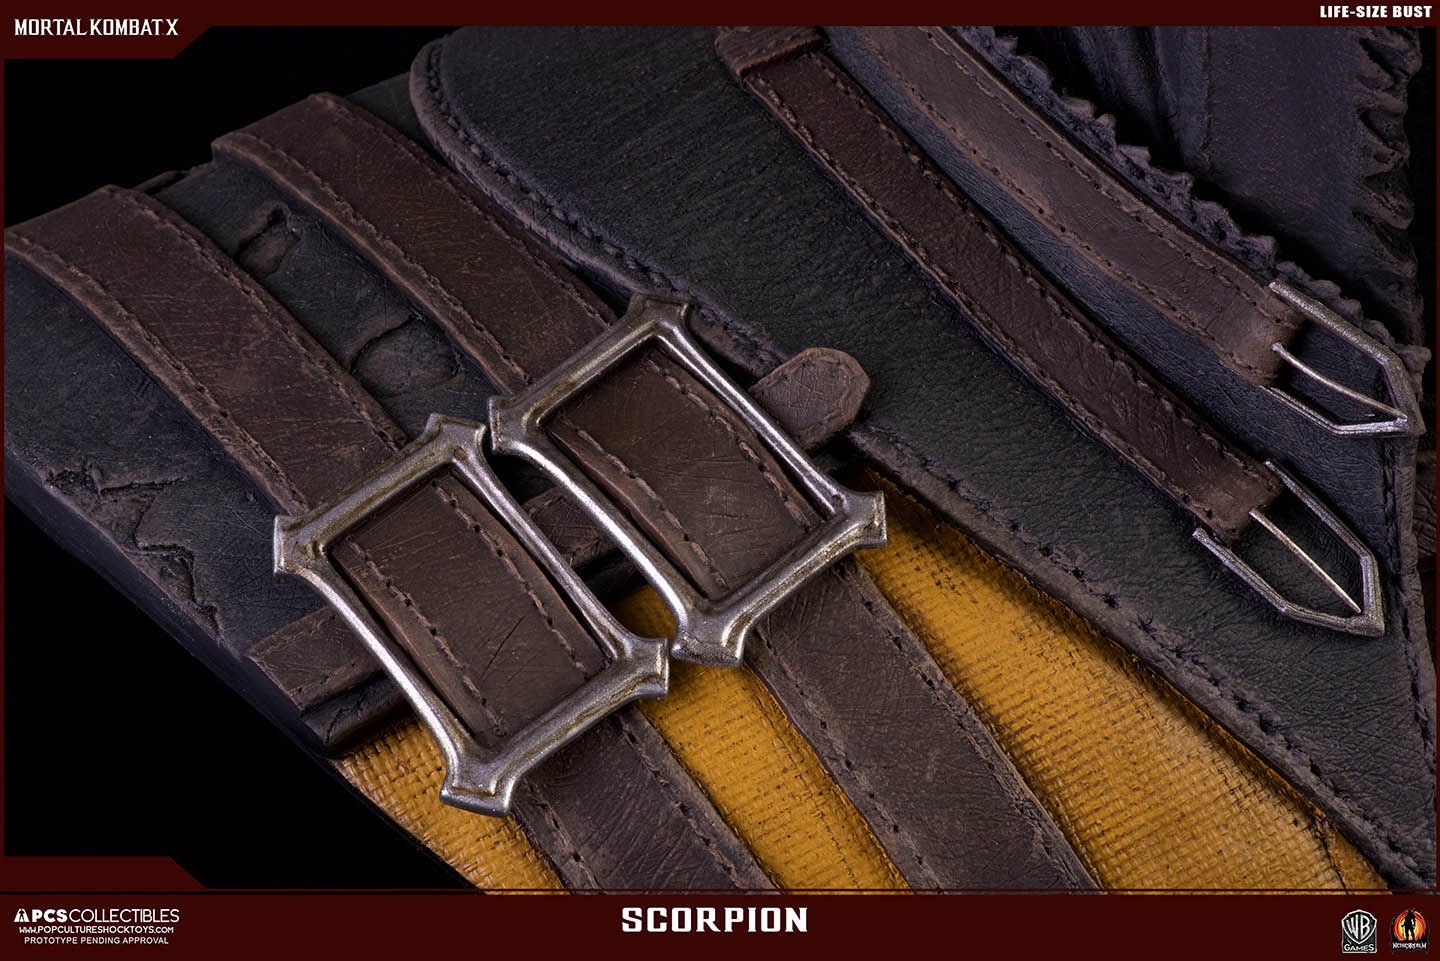 Scorpion-Bust-Pop-culture-Shock-Mortal-Kombat-X-015.jpg